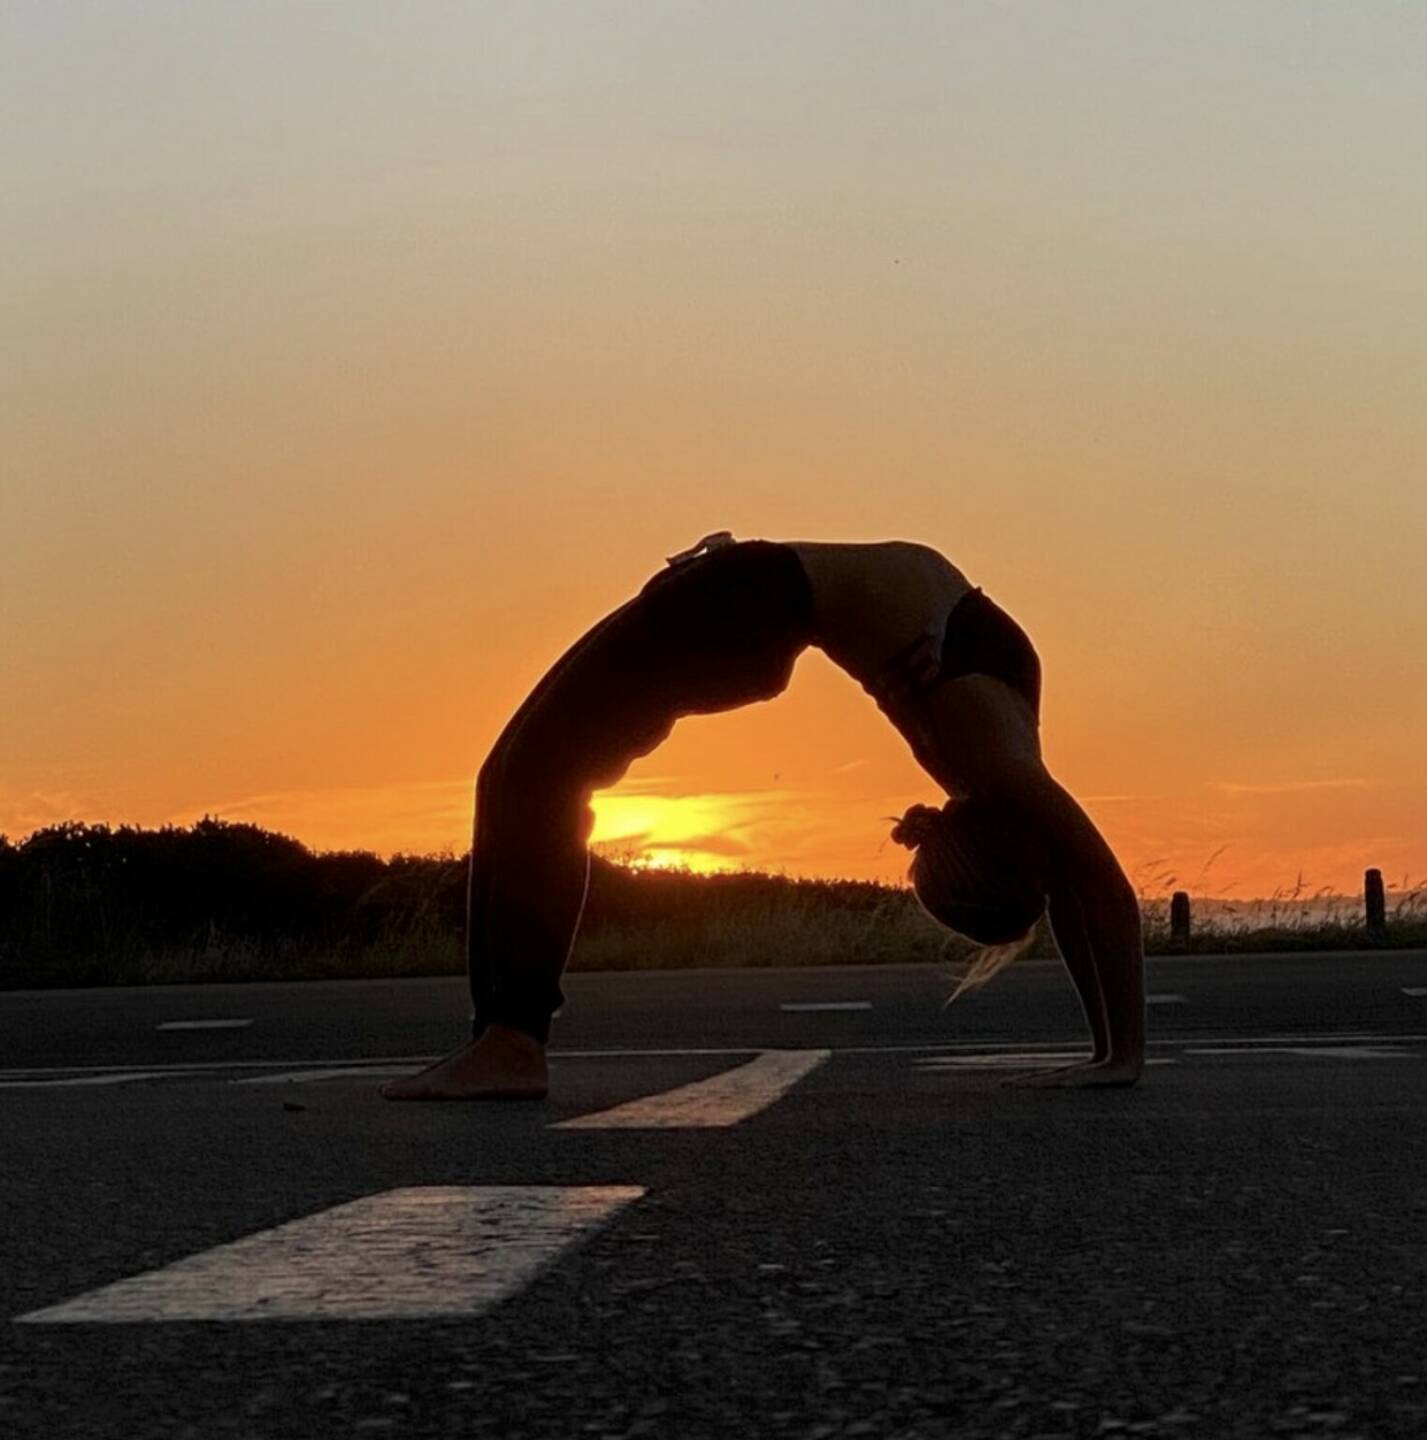 Morgen Brücke Sonne Ruhe Eva Lillan
⫷ Yogateacher since 2016 ⫸ 
⫷ +500h RYT ⫸Vinyasa • Yin ⫸
𖠳 ᐝ ꕀ Digital & analogue Nomade
‧₊˚✩彡 (Social-)Mediadesign
linktr.ee/Lillanyoga
https://www.instagram.com/lillanyoga/